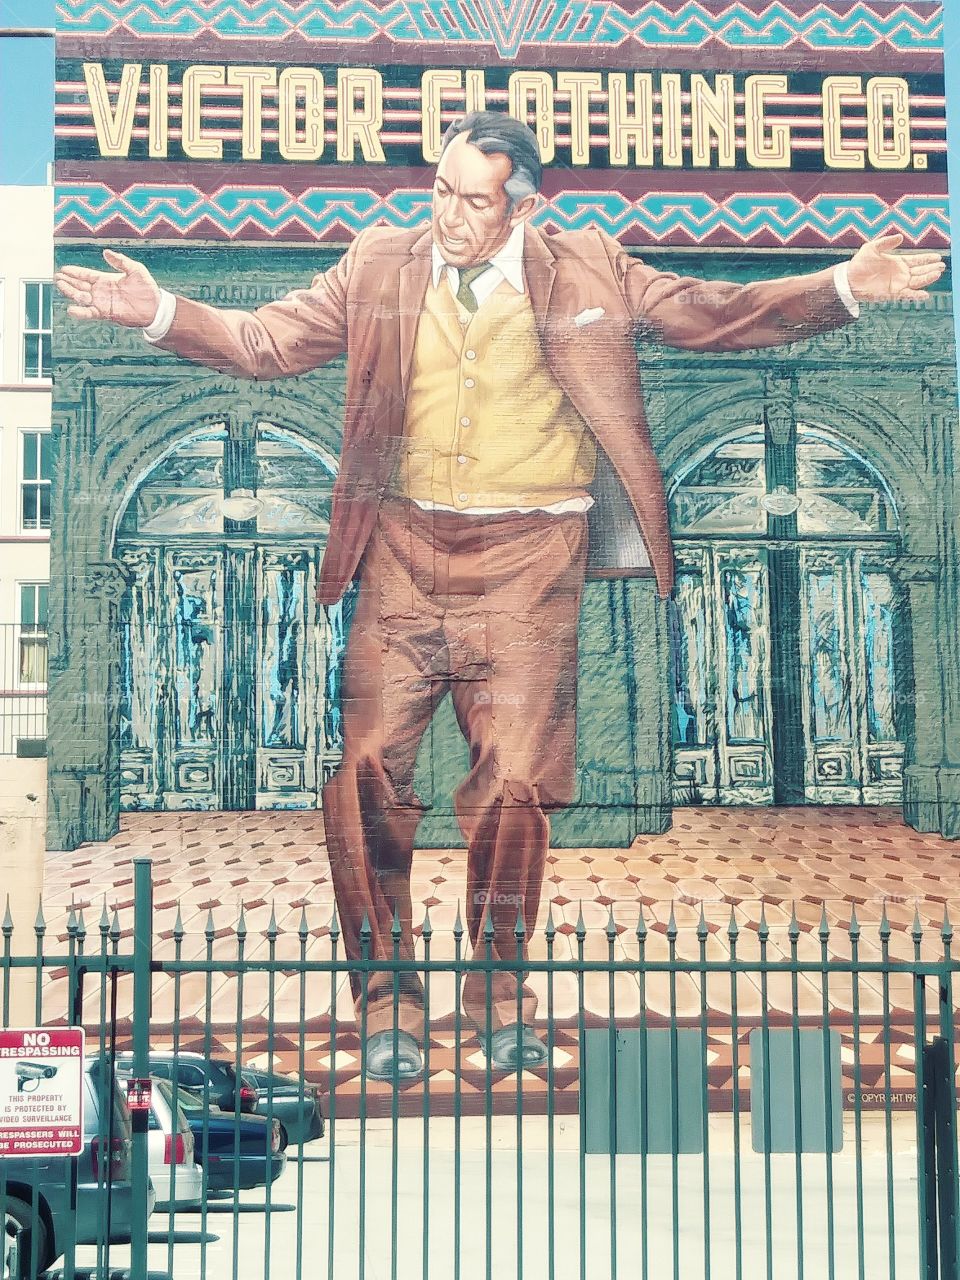 Mural Downtown L.A.